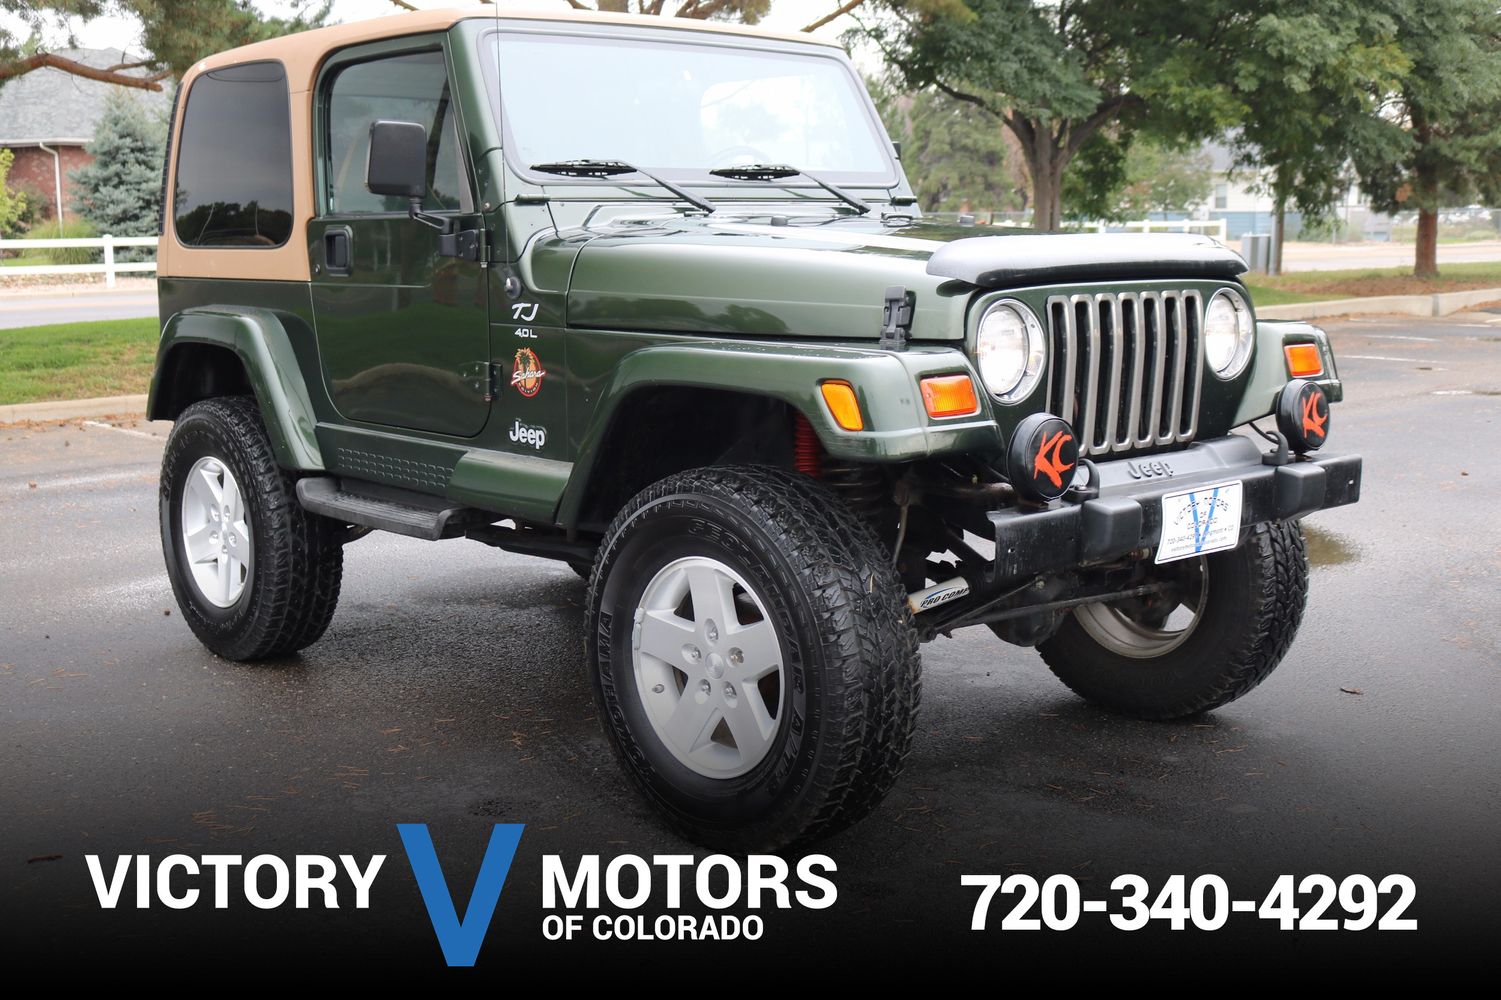 1998 Jeep Wrangler Sahara | Victory Motors of Colorado